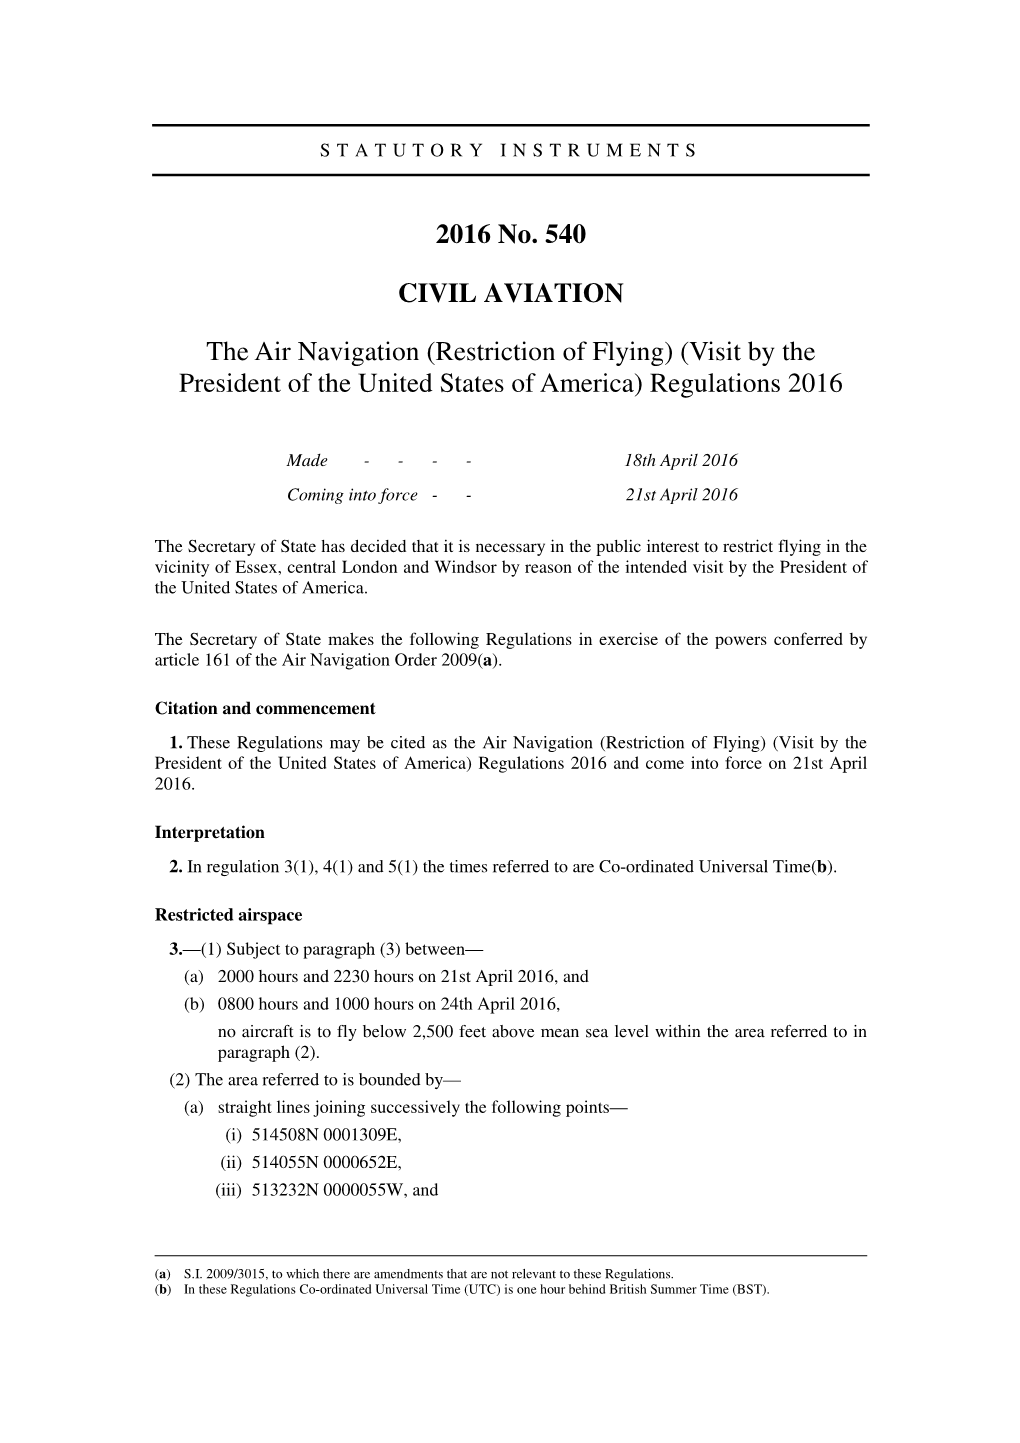 Regulations 2016